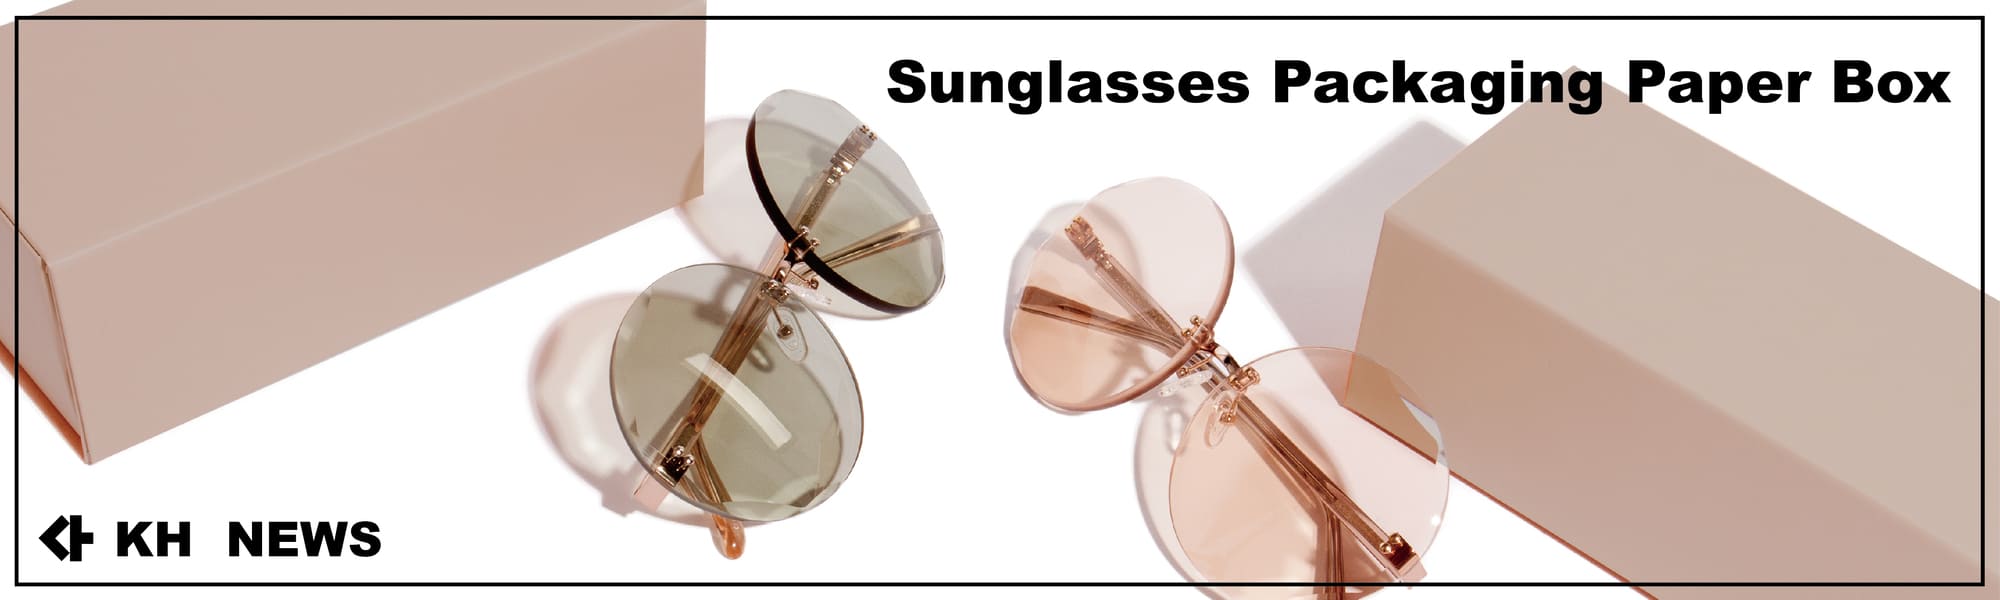 Sunglasses Packaging Paper Box